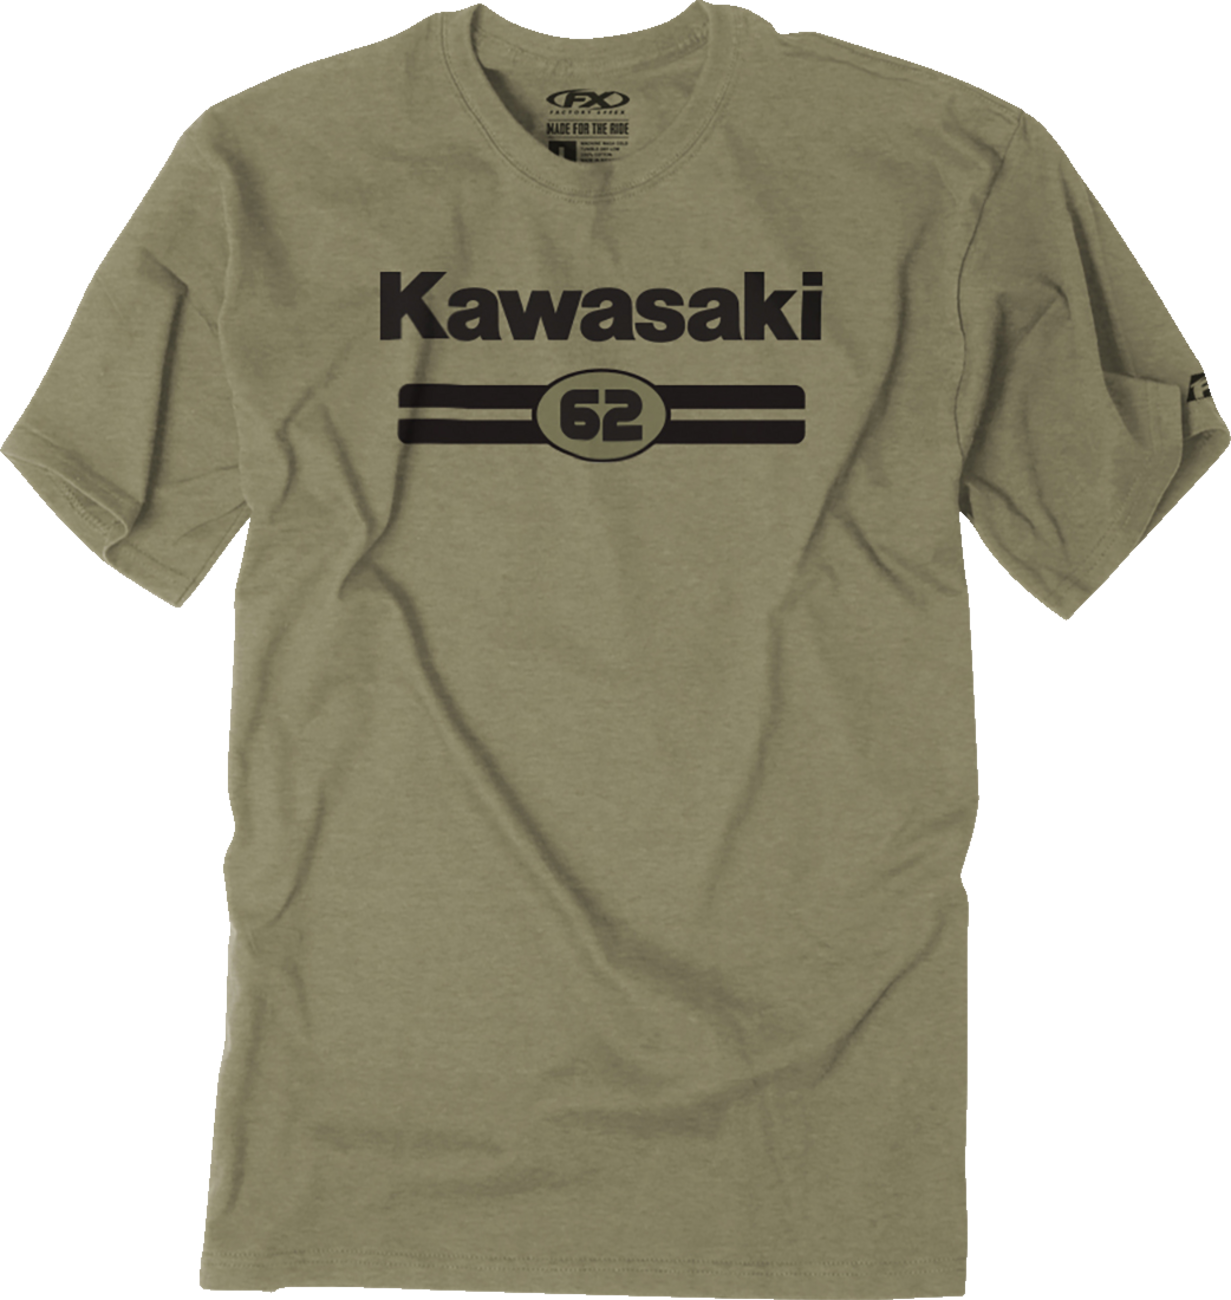 FACTORY EFFEX Kawasaki Sixty Two T-Shirt - Heather Olive - 2XL 27-87128